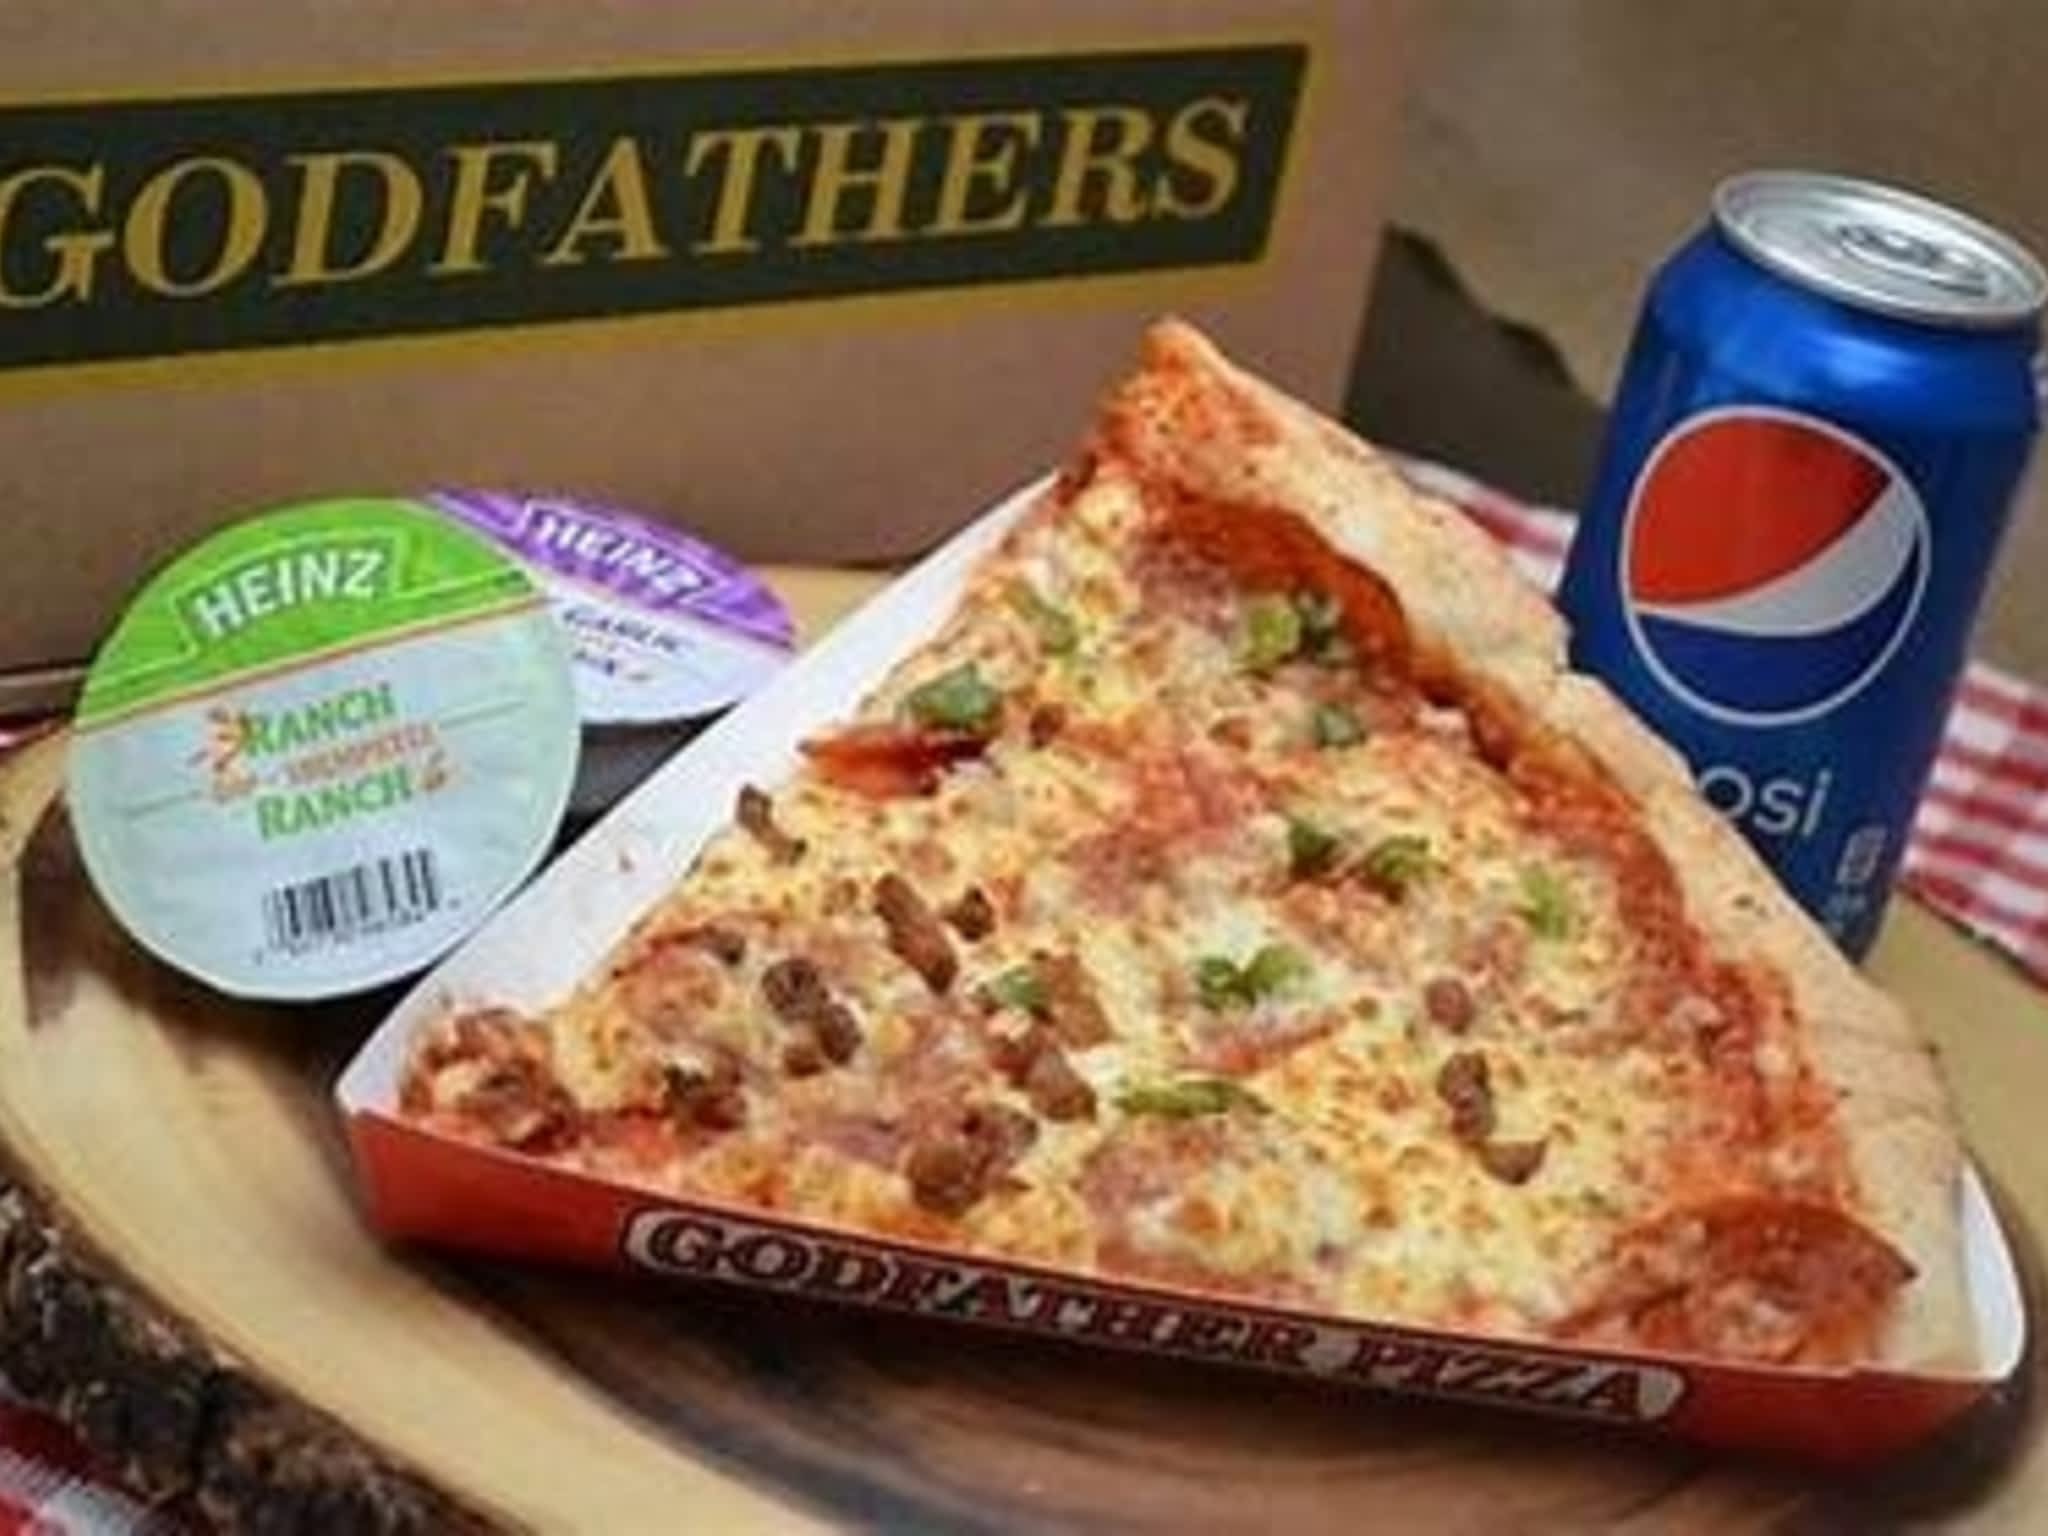 photo Godfathers Pizza - Durham